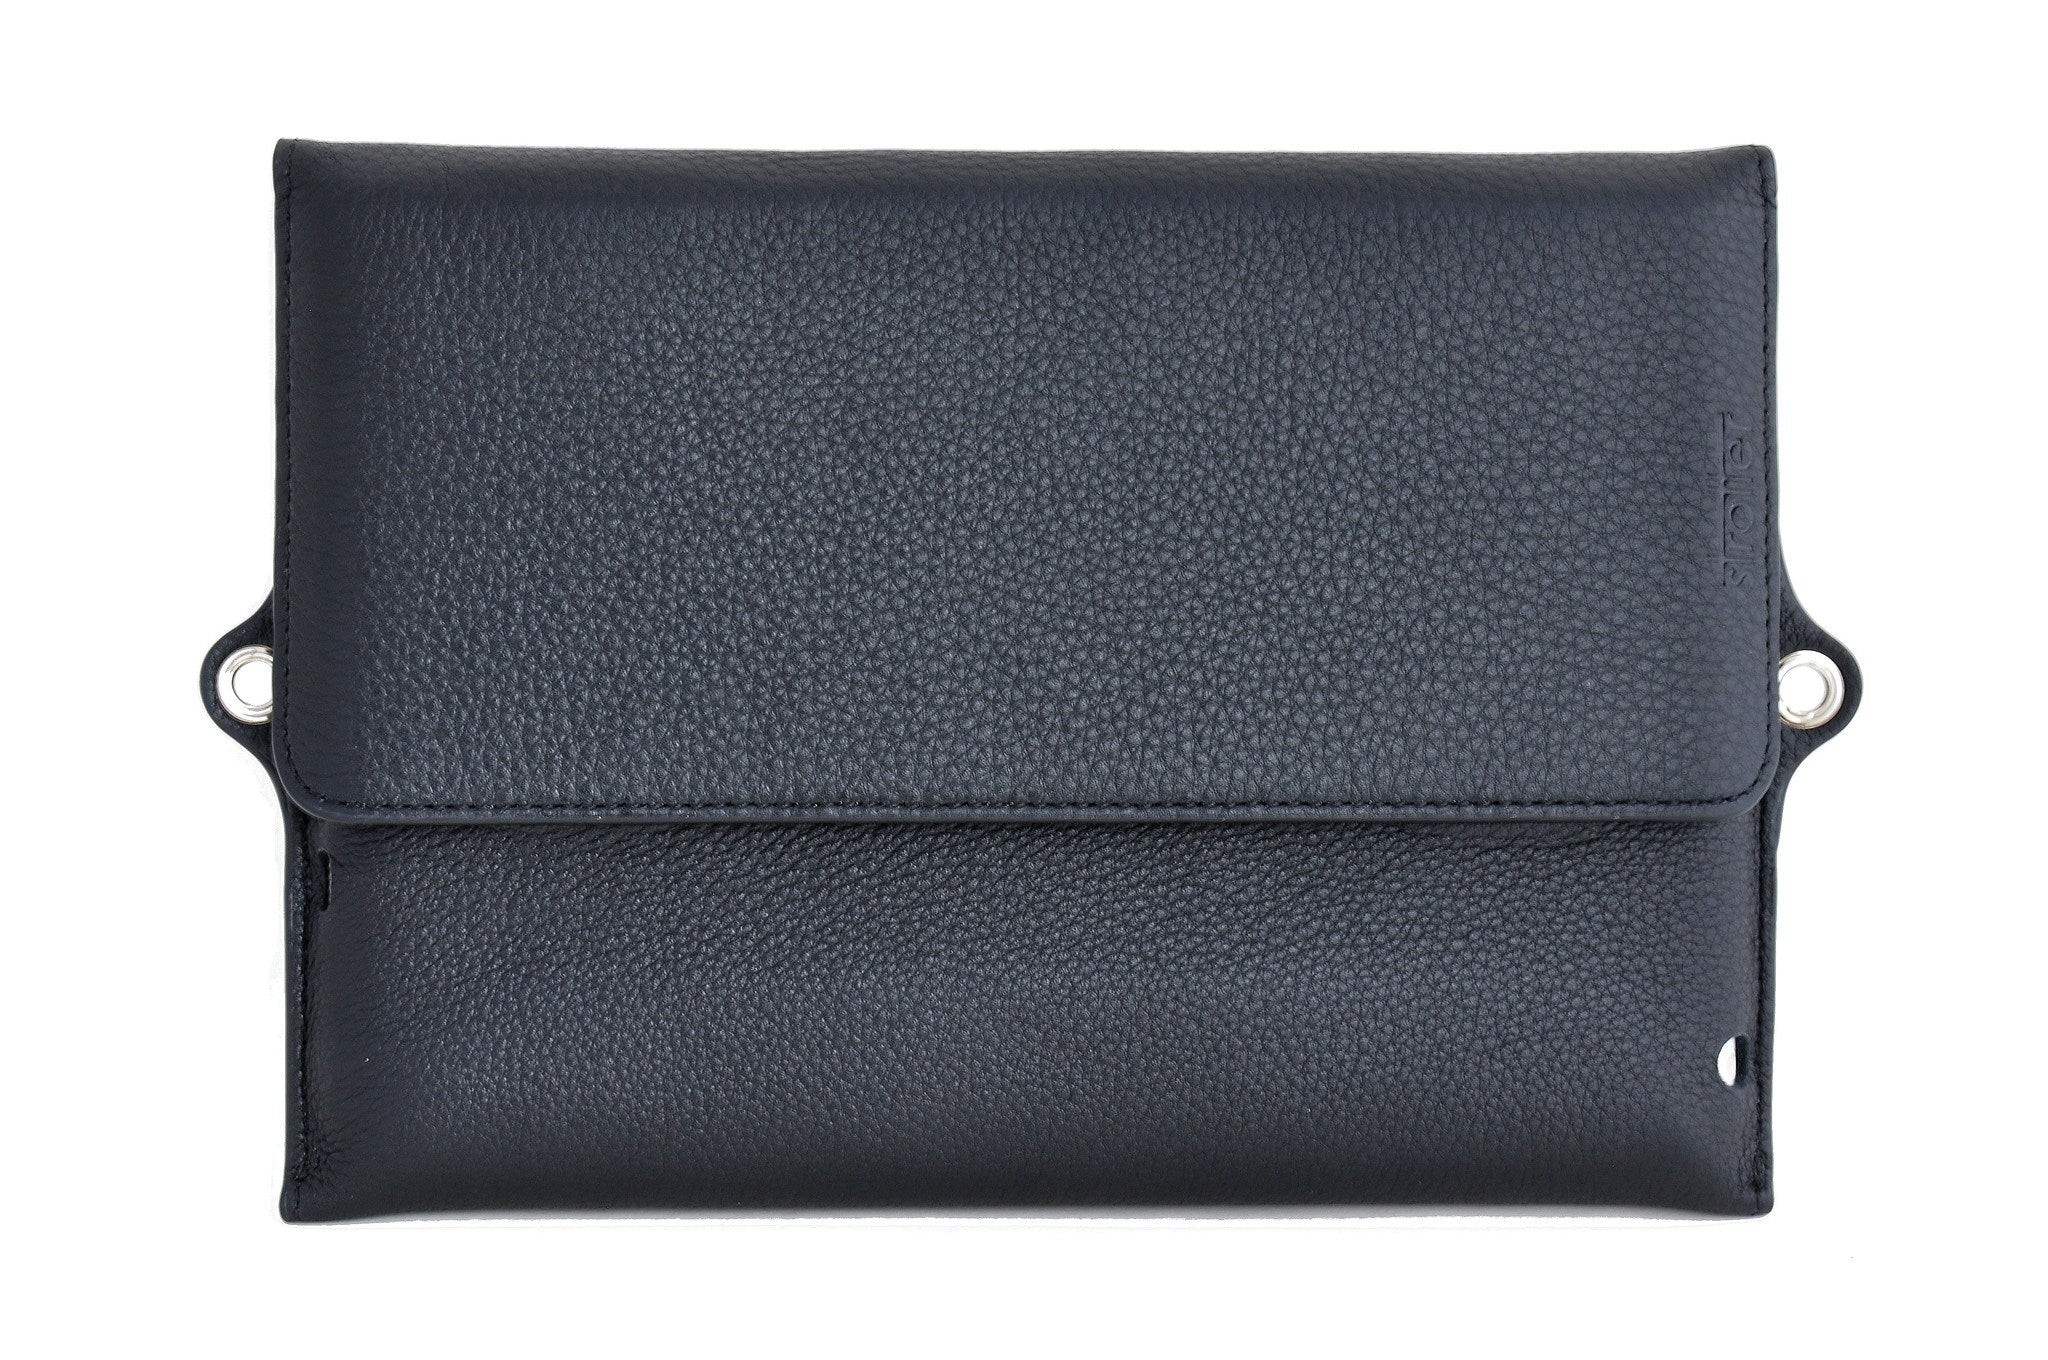 Case for iPad Mini - Across GL (genuine leather) in black.